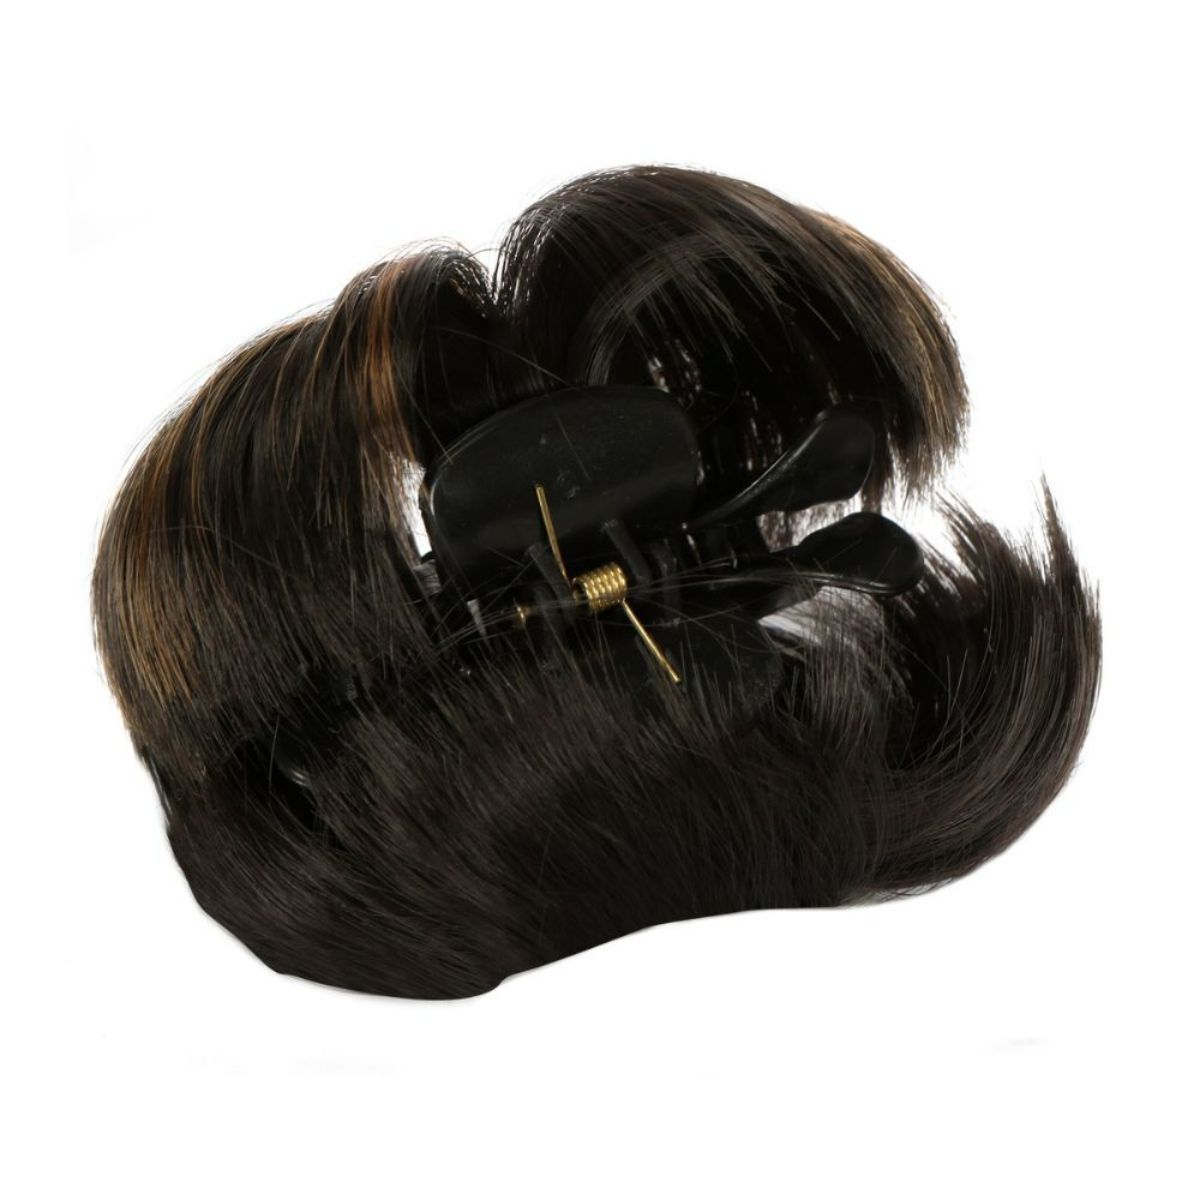 Bias Brown Clutcher Hair Extension  Buy Bias Brown Clutcher Hair Extension  online in India